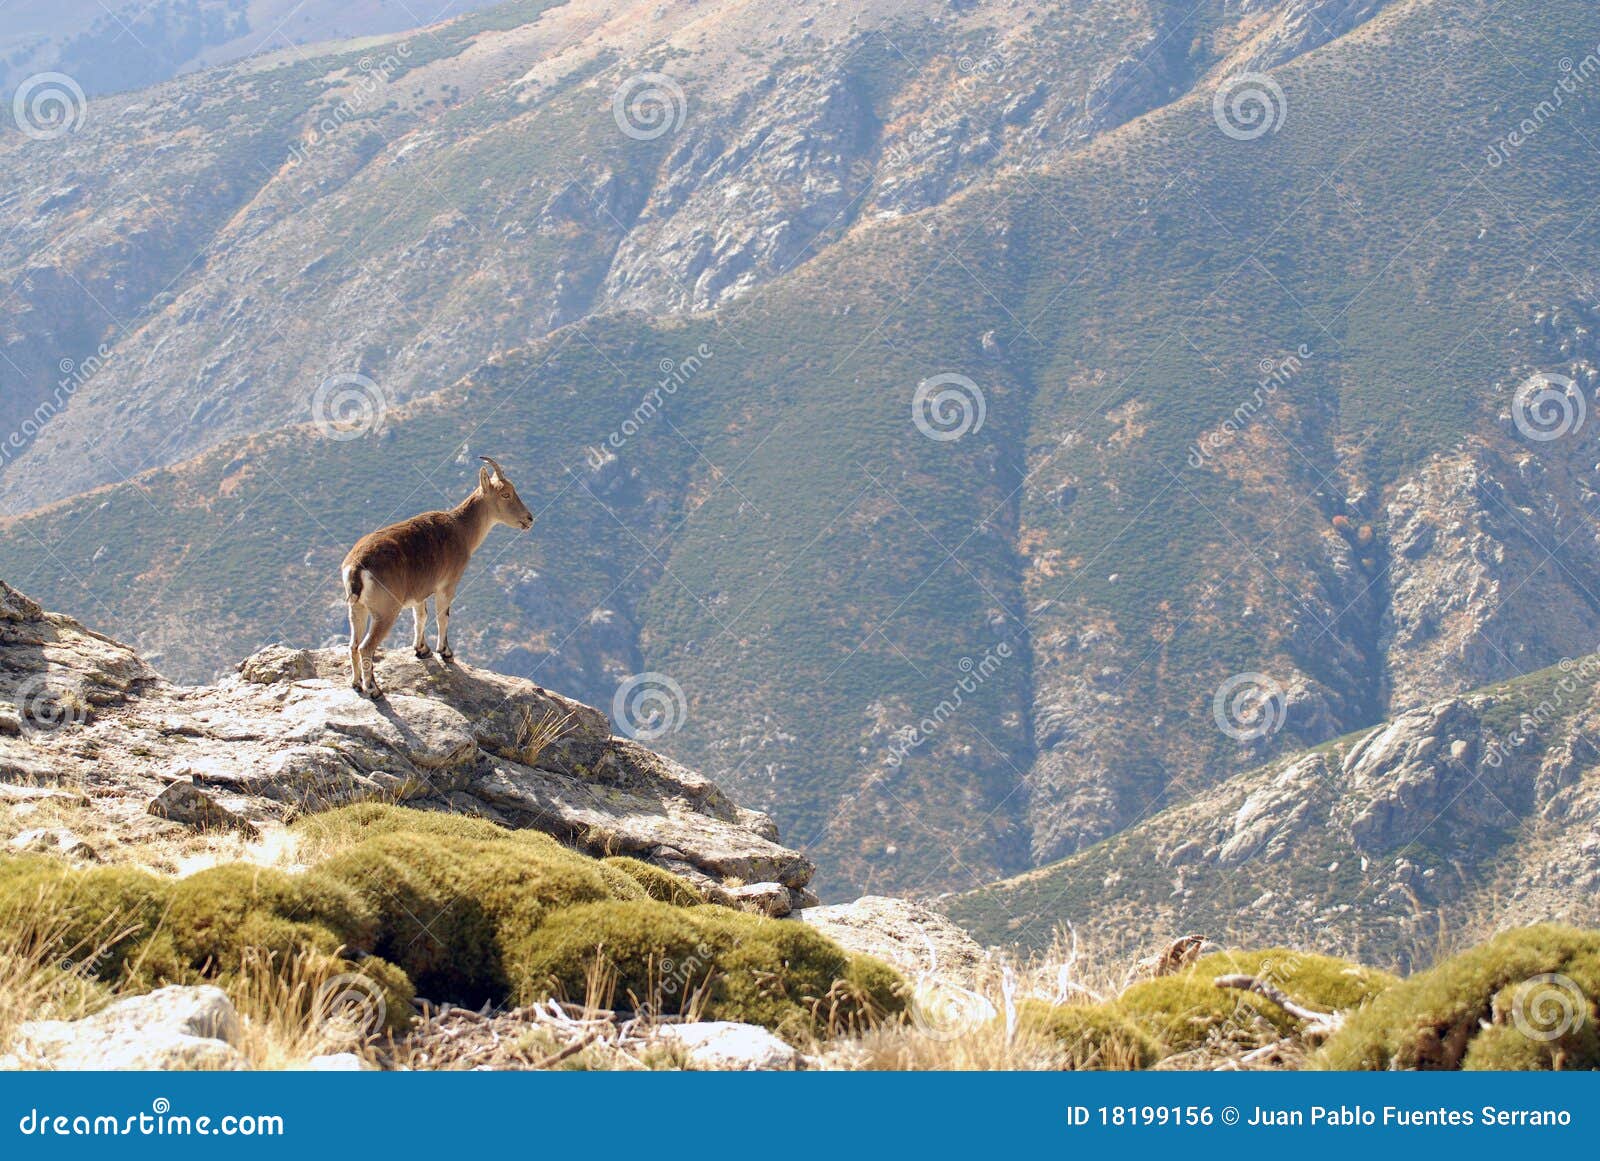 Gredos Mountains and fauna-Avila, Spain